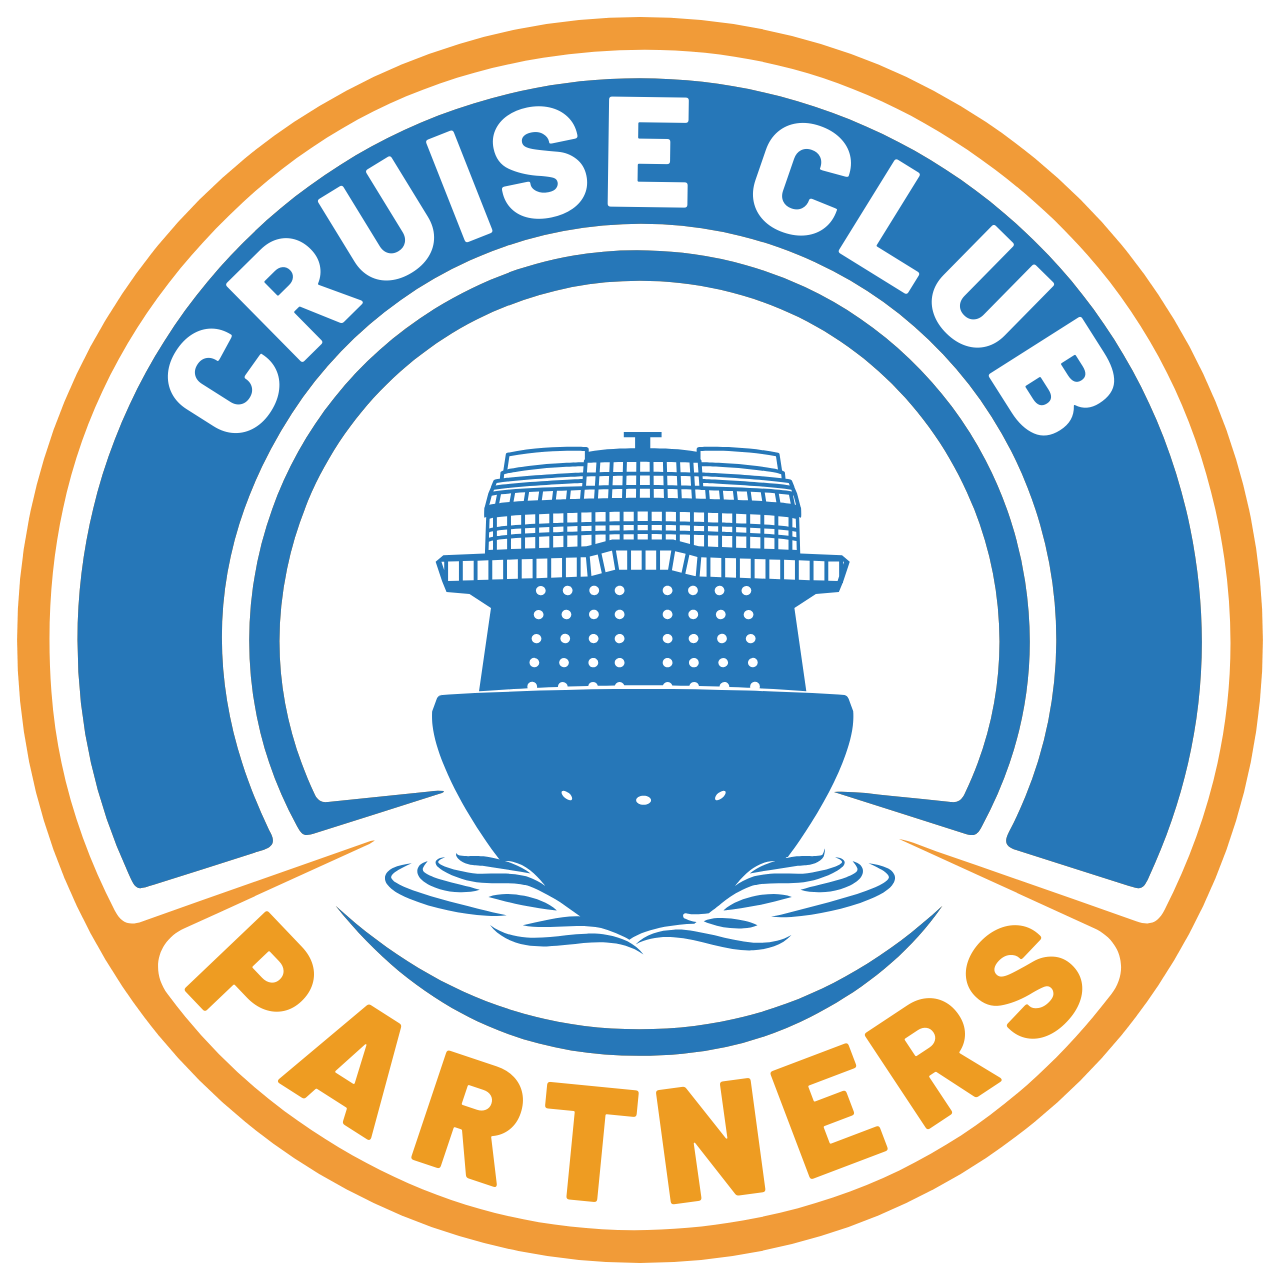 Cruise Club Partners